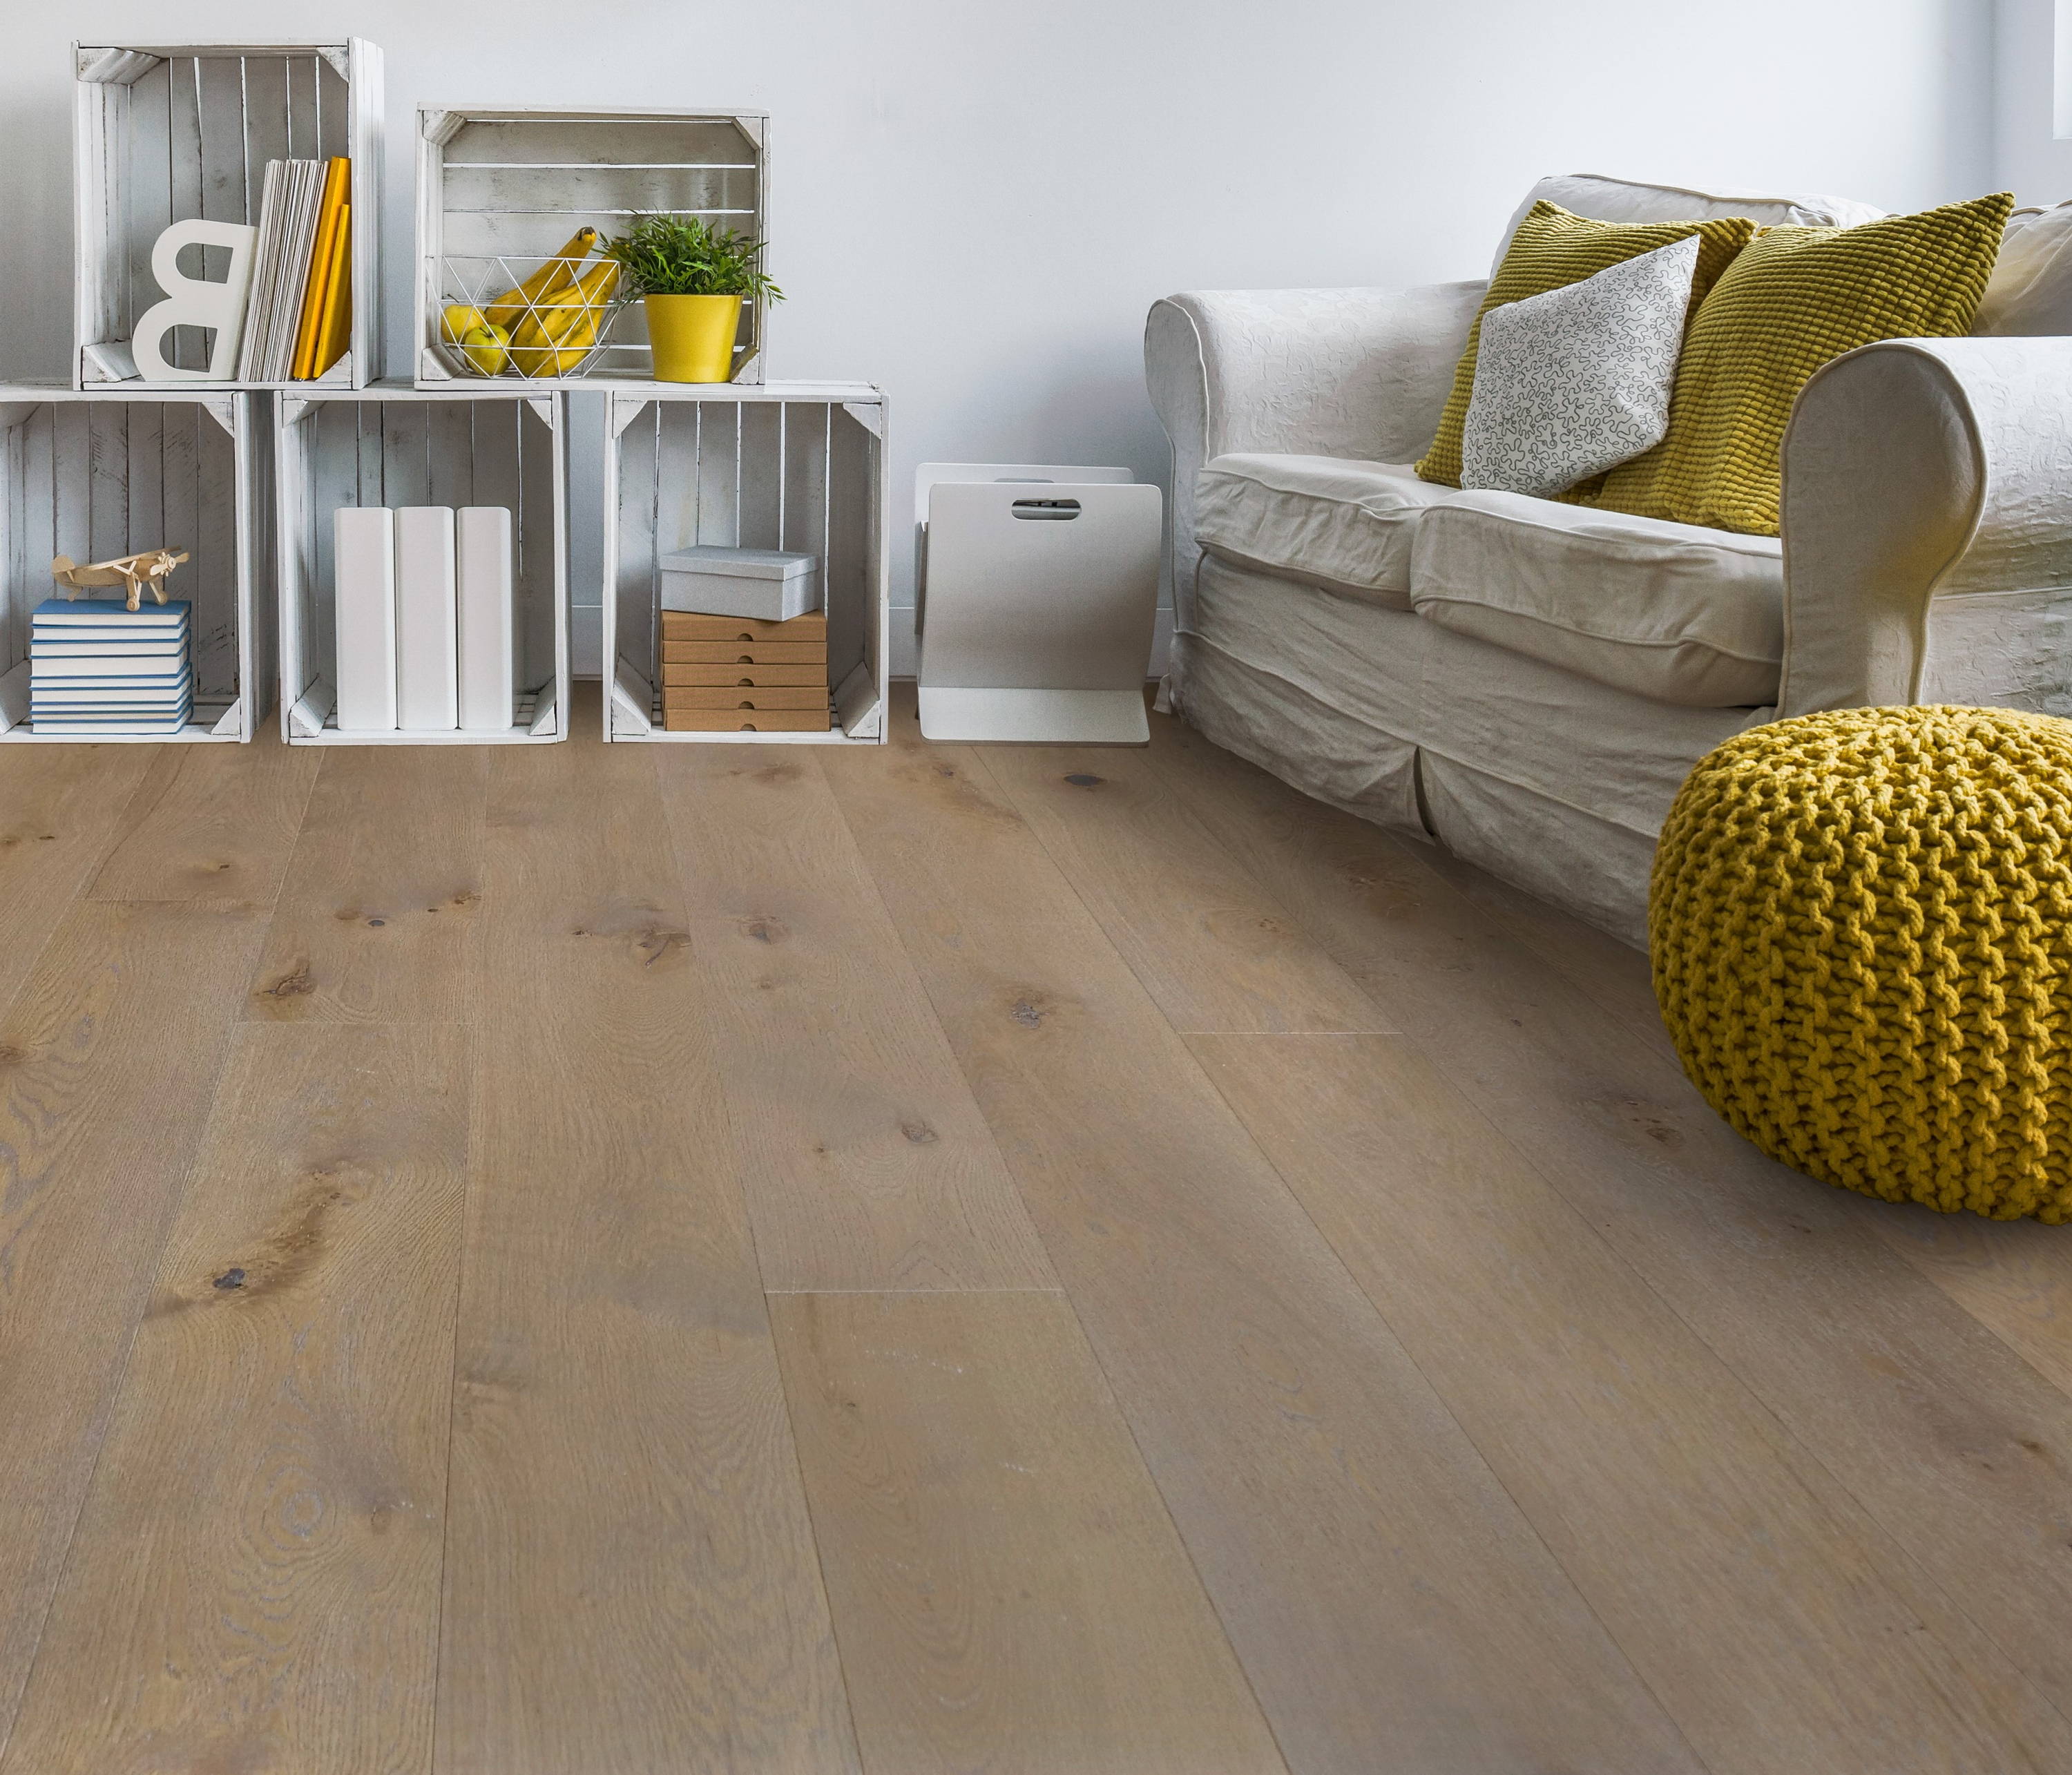 Hardwood Flooring Increase, Do Hardwood Floors Add Value To Your Home